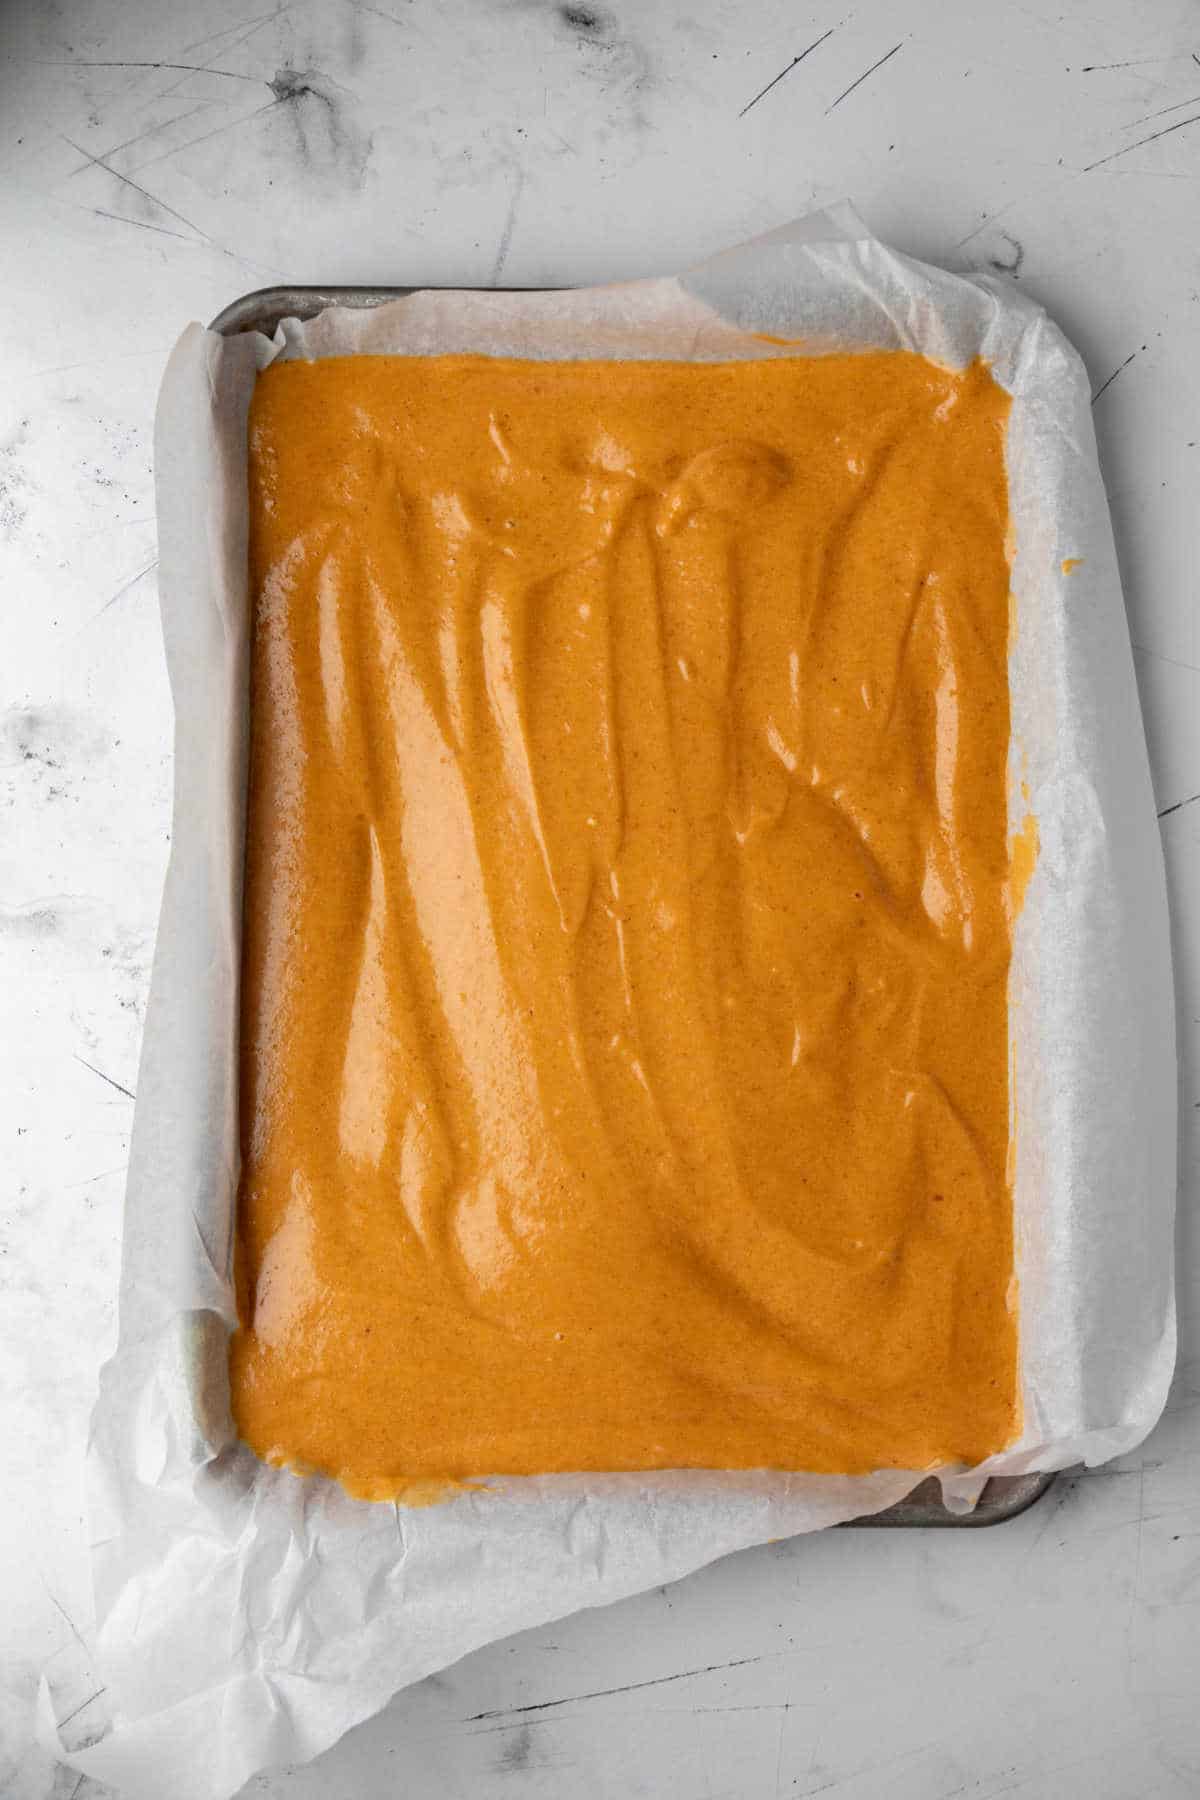 Pumpkin cake batter in a jelly roll pan.